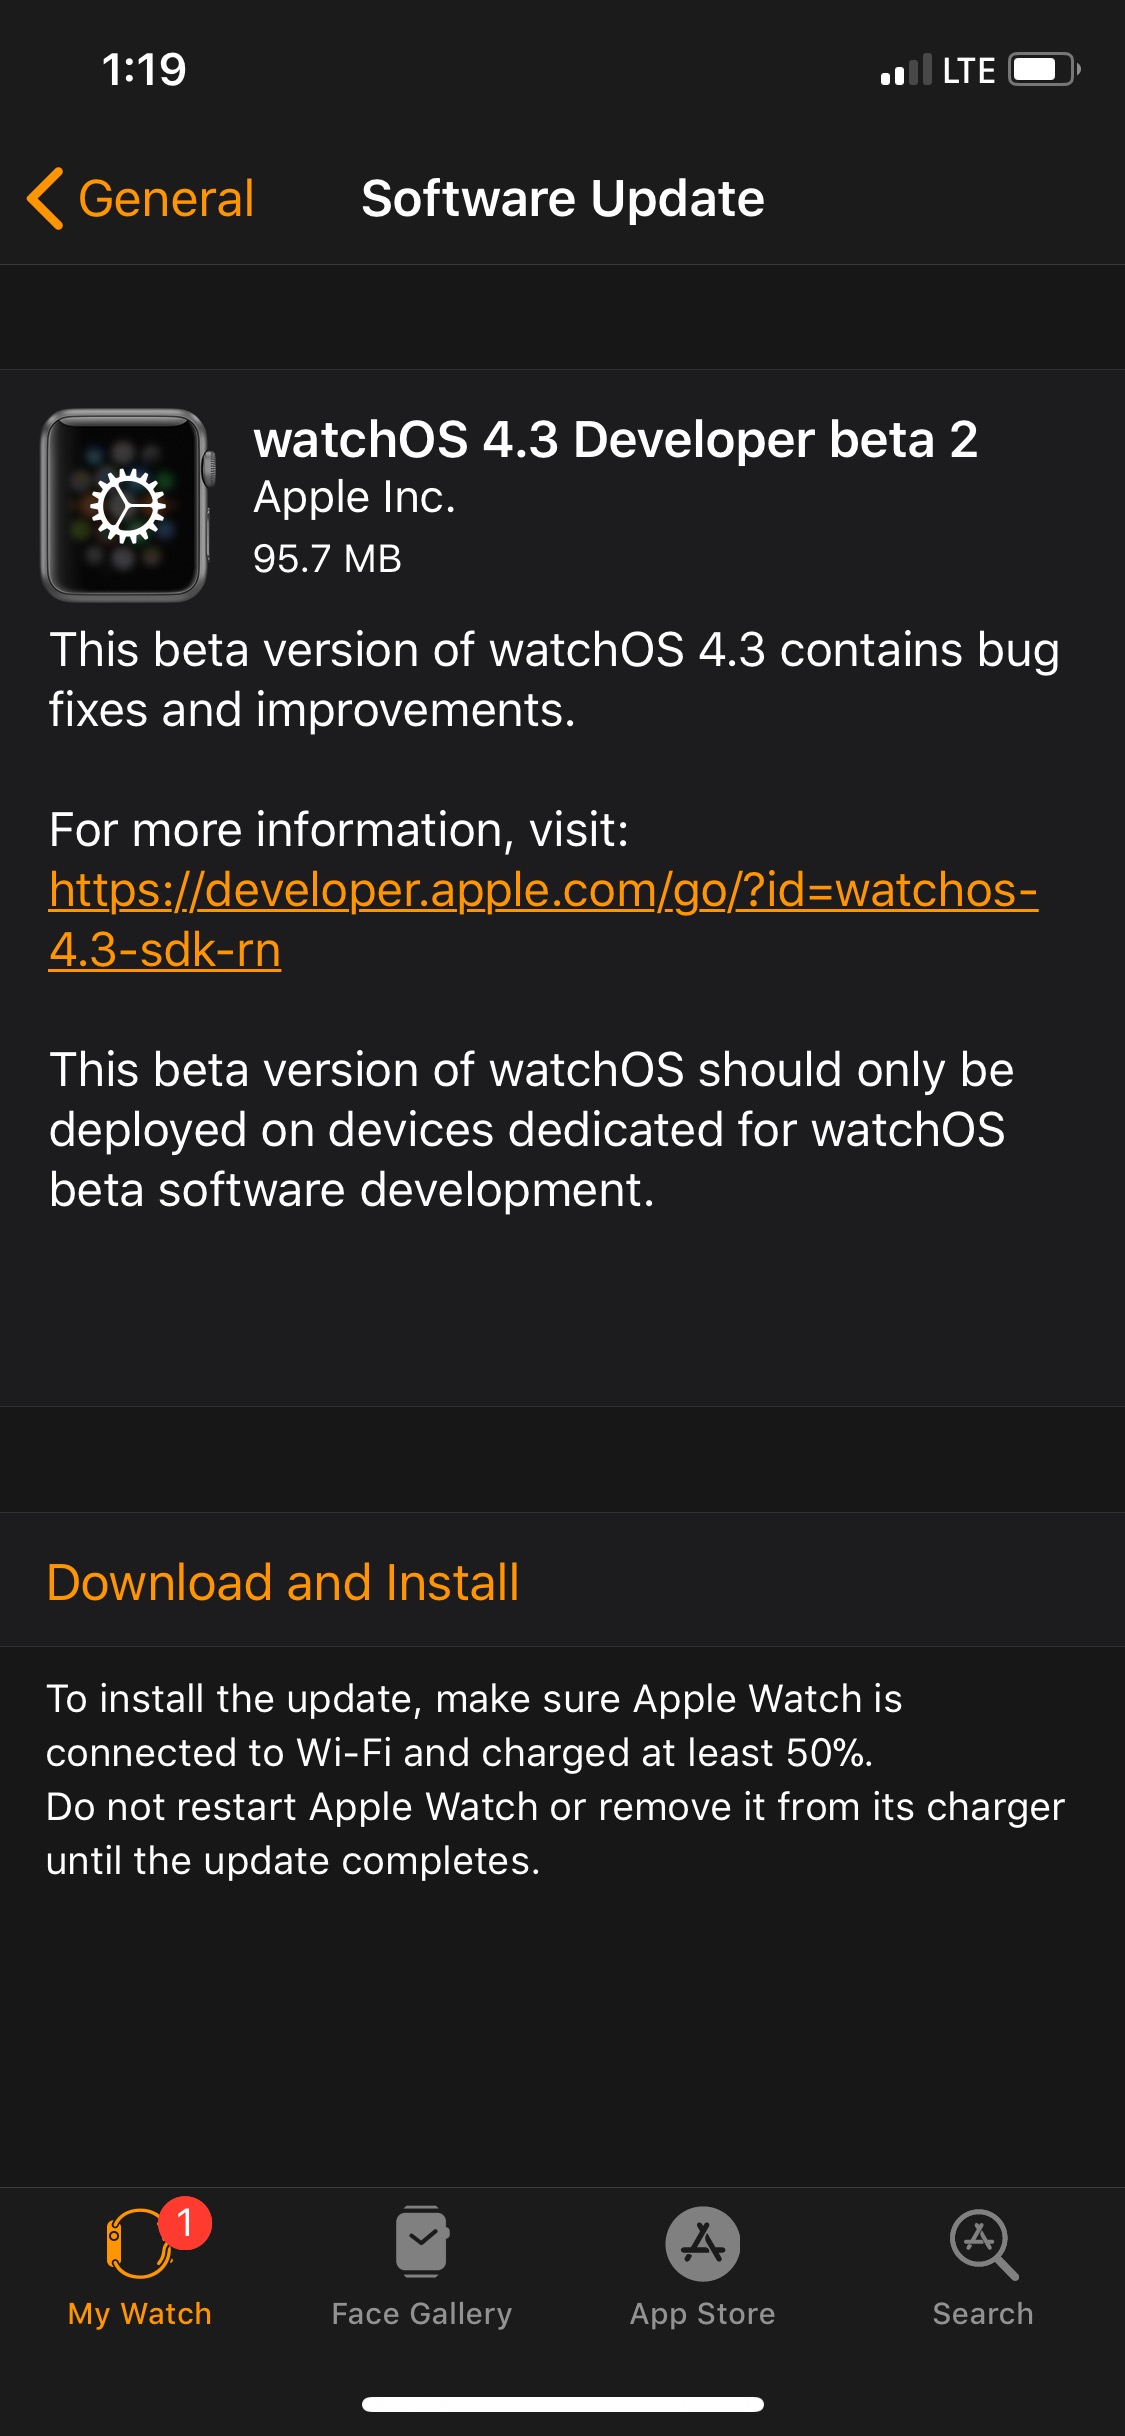 Apple Seeds watchOS 4.3 Beta 2 to Developers [Download]